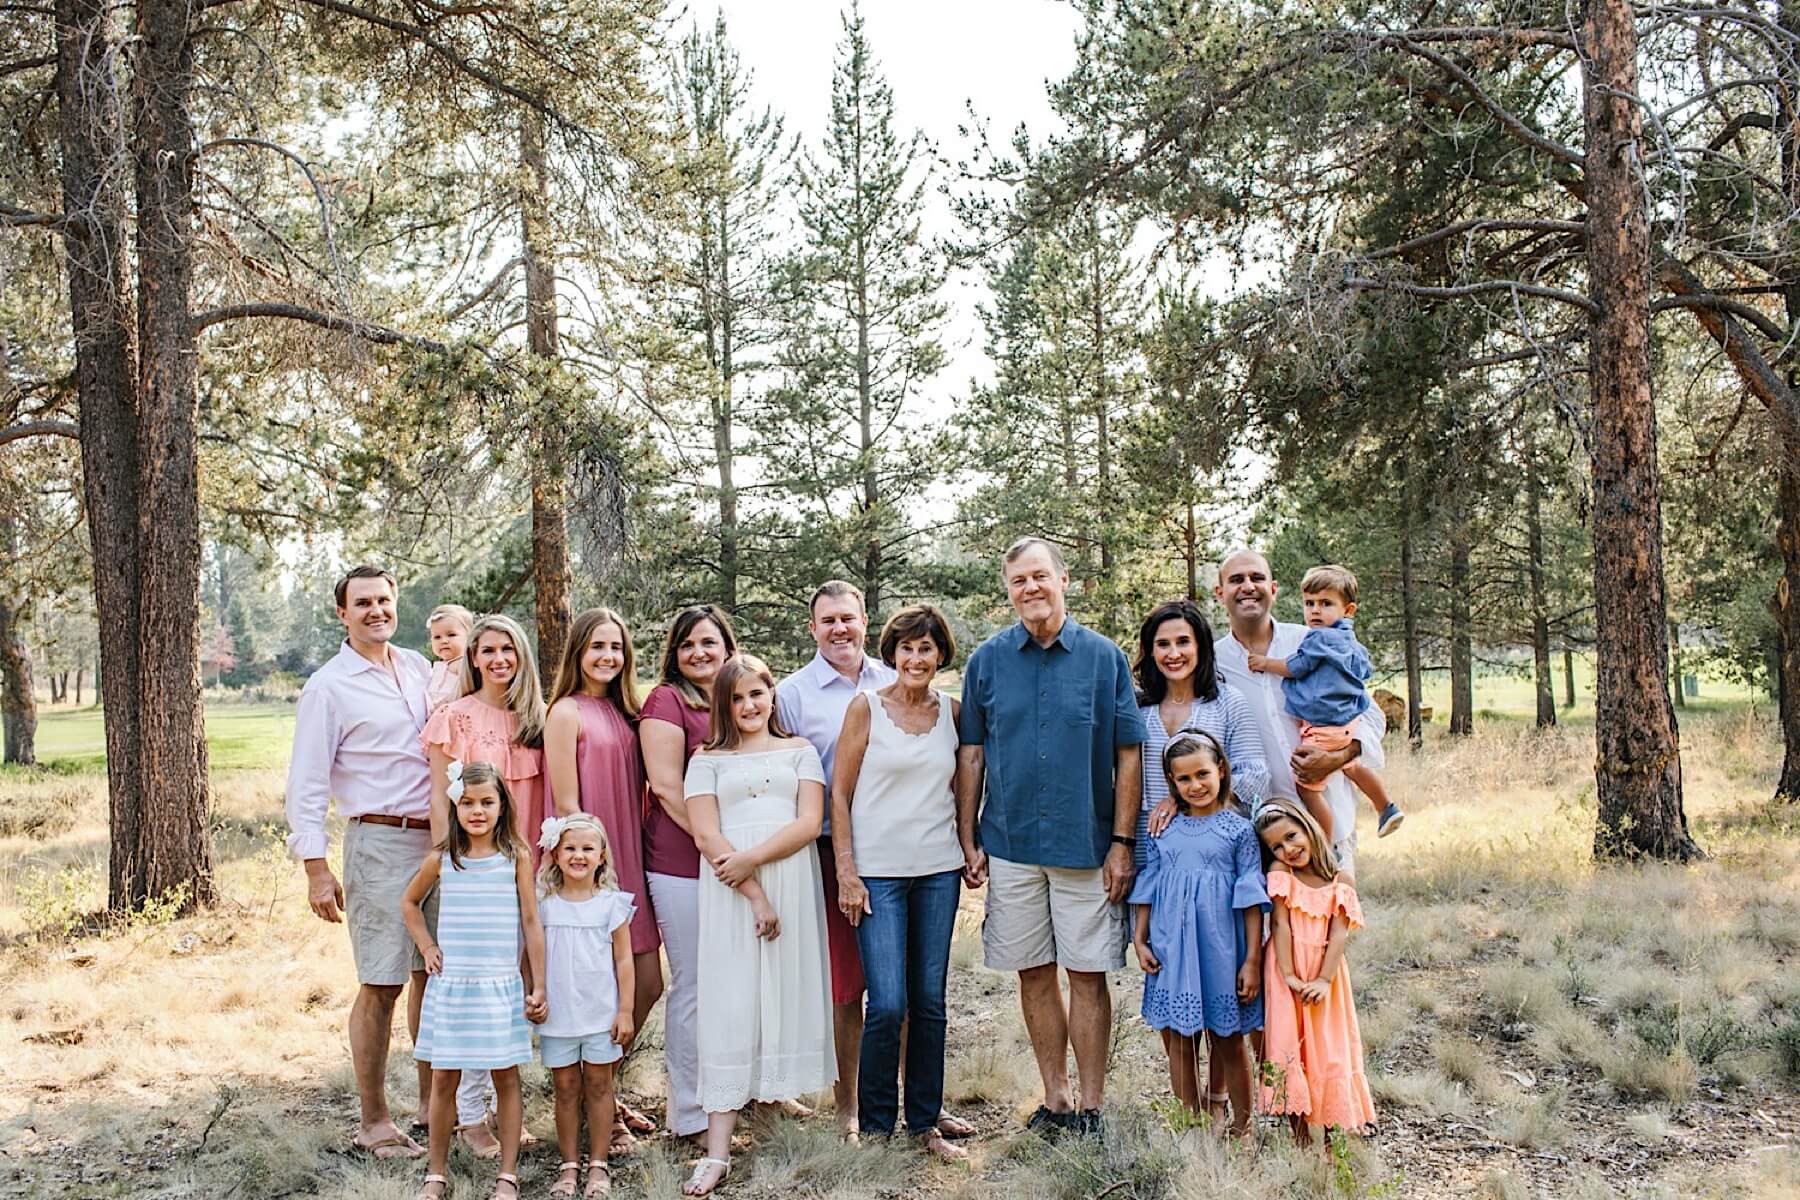 Family vacation portrait session in Sunriver, Bend, Oregon.